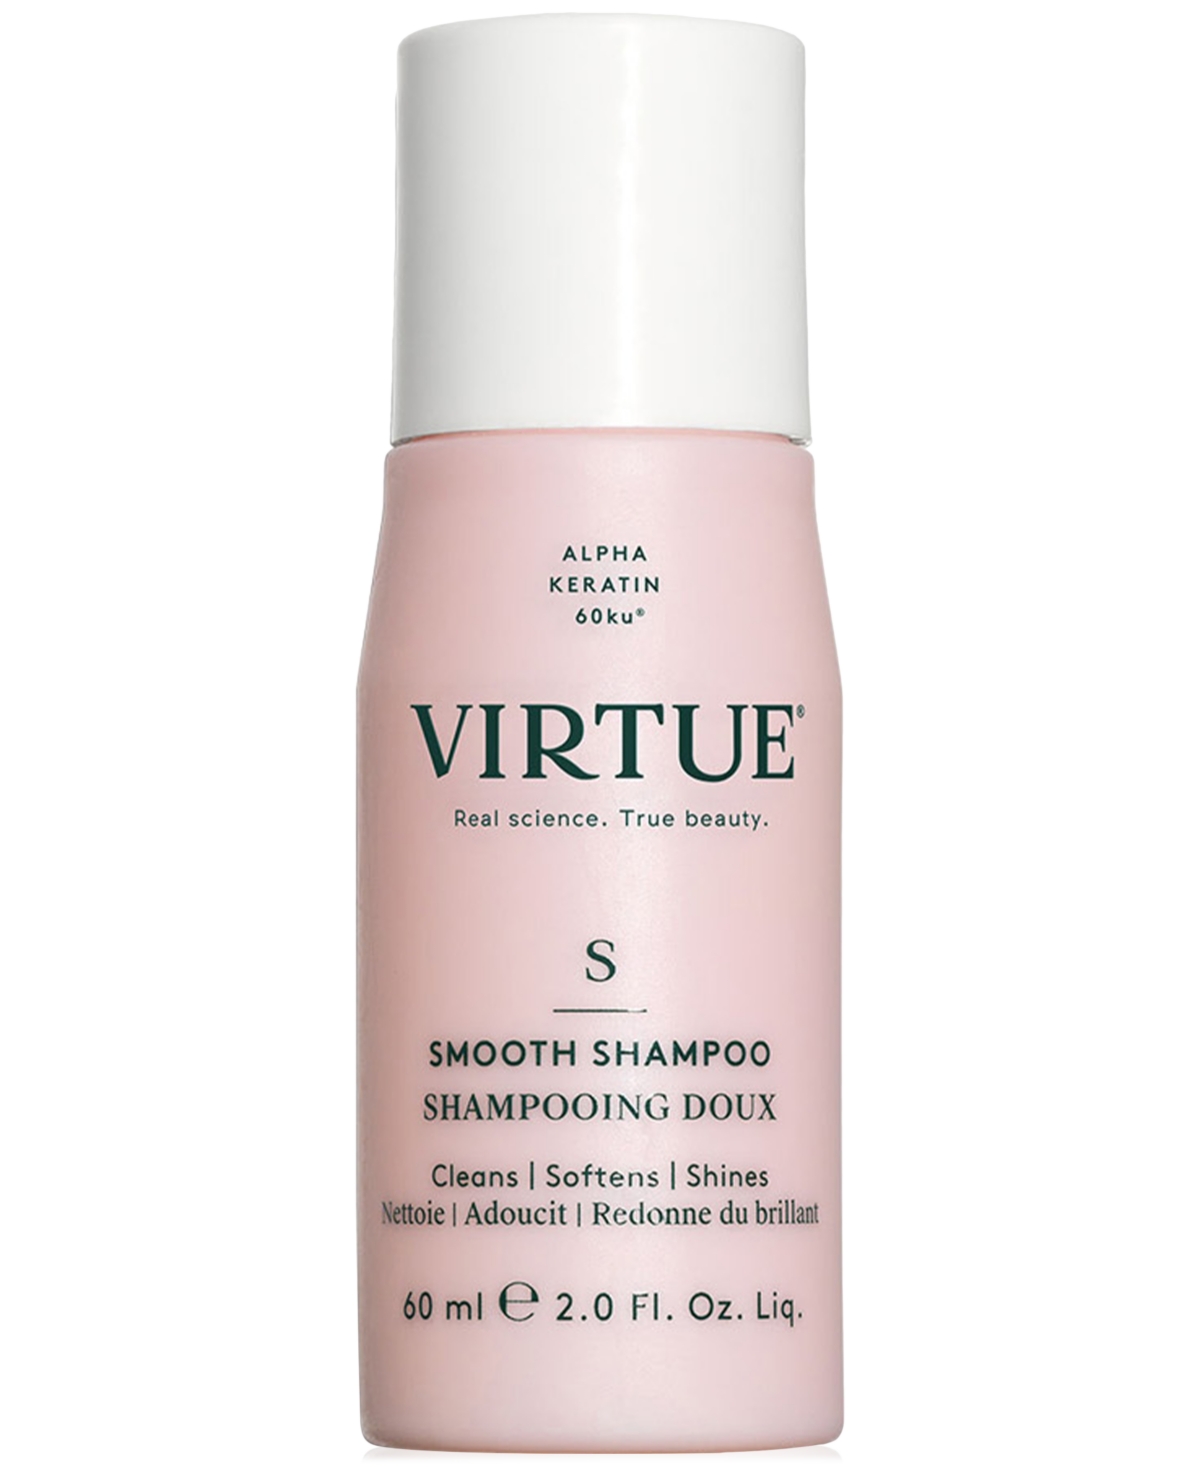 Virtue Smooth Shampoo, 60 ml